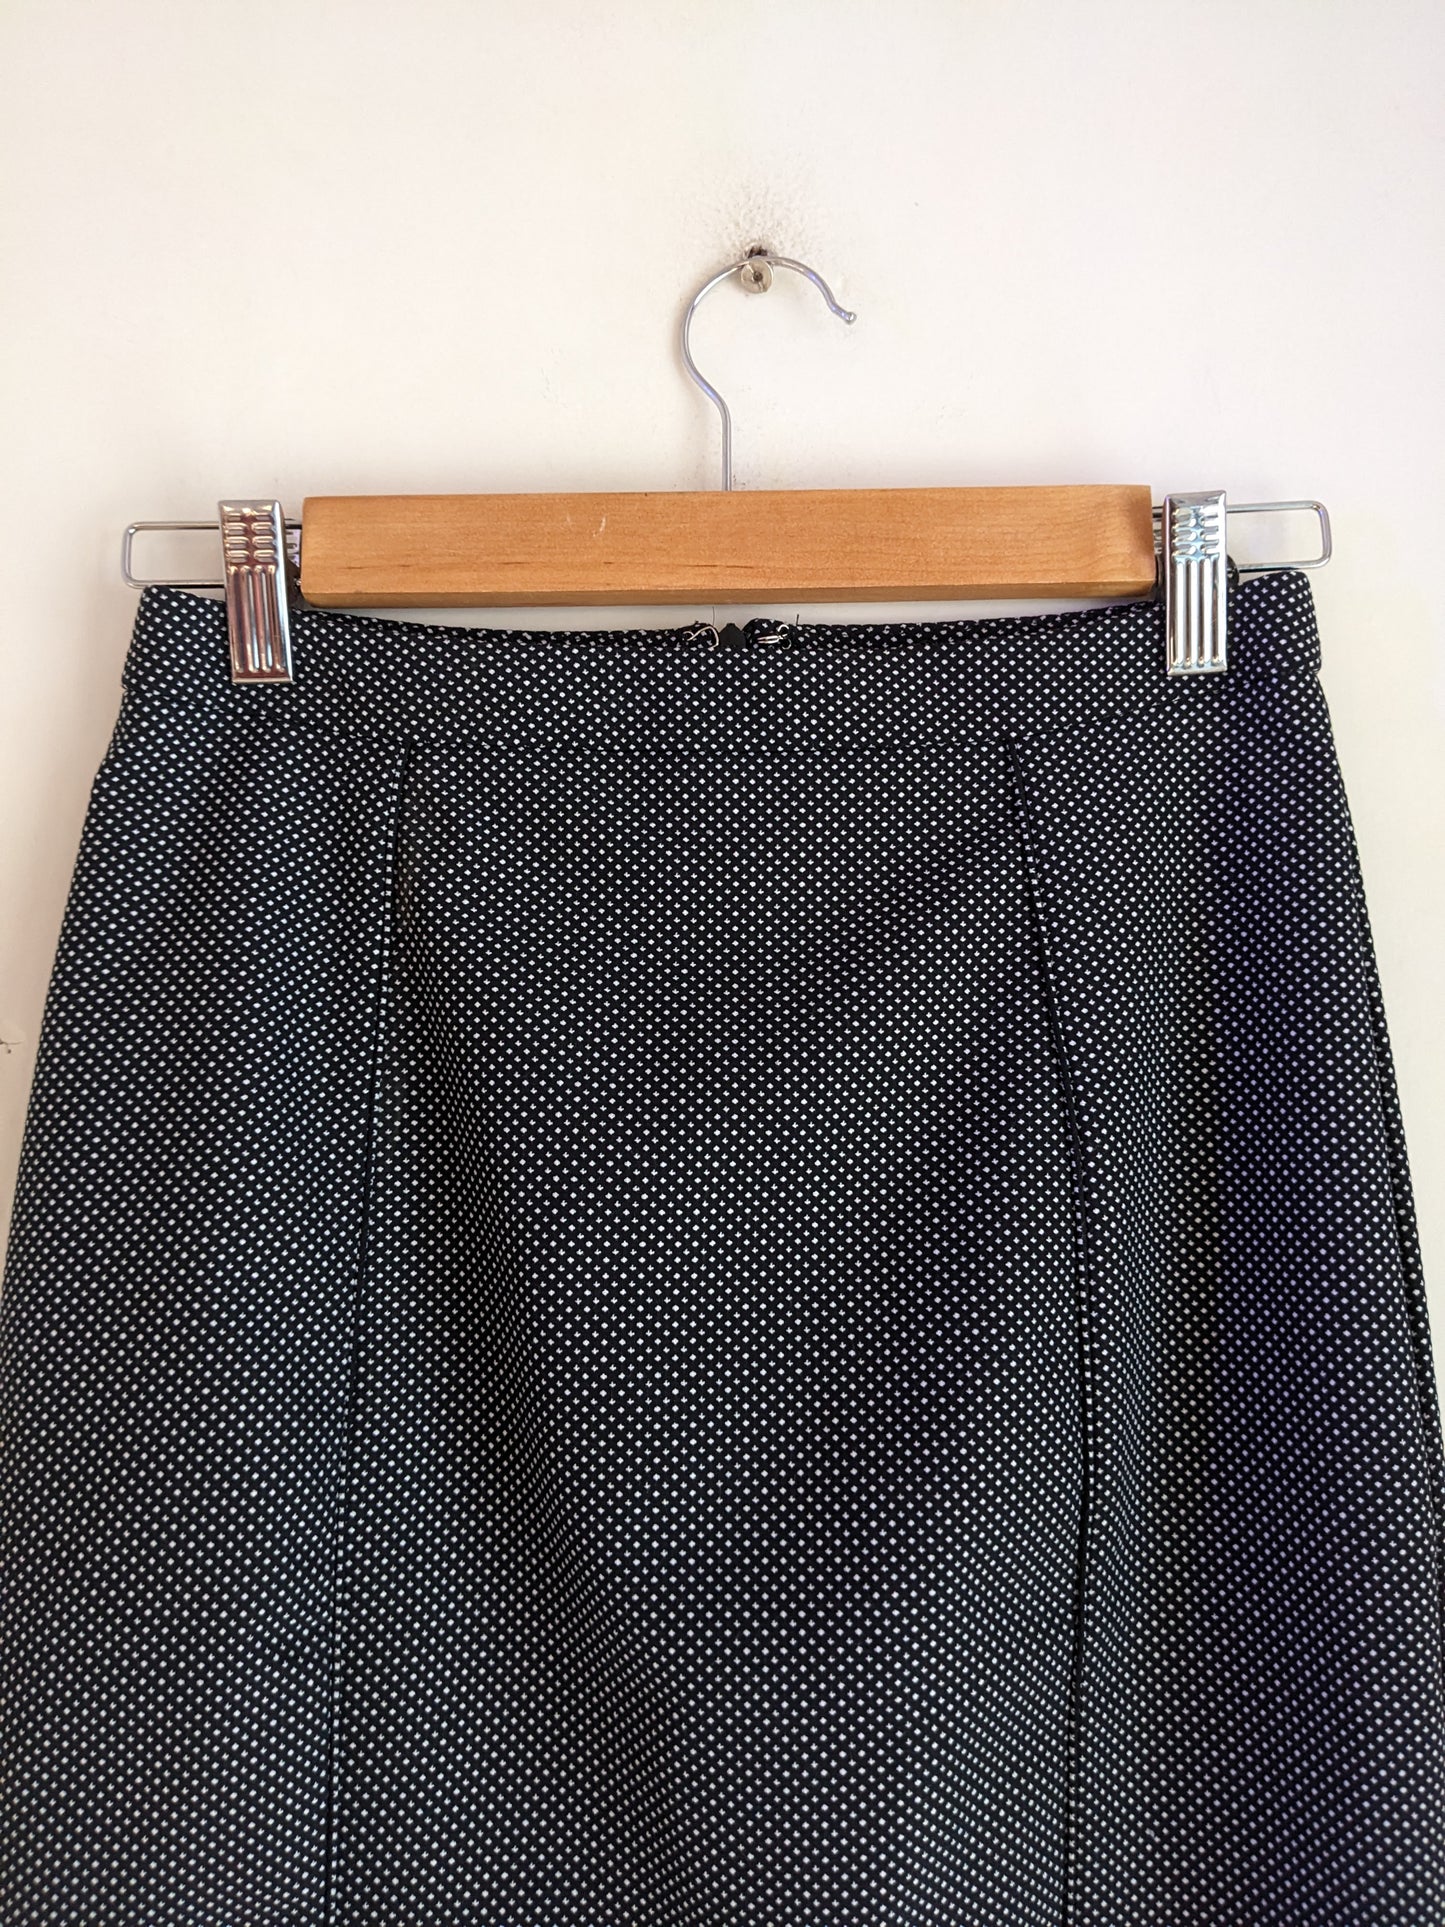 Vanhuesen Navy Blue Printed Skirt